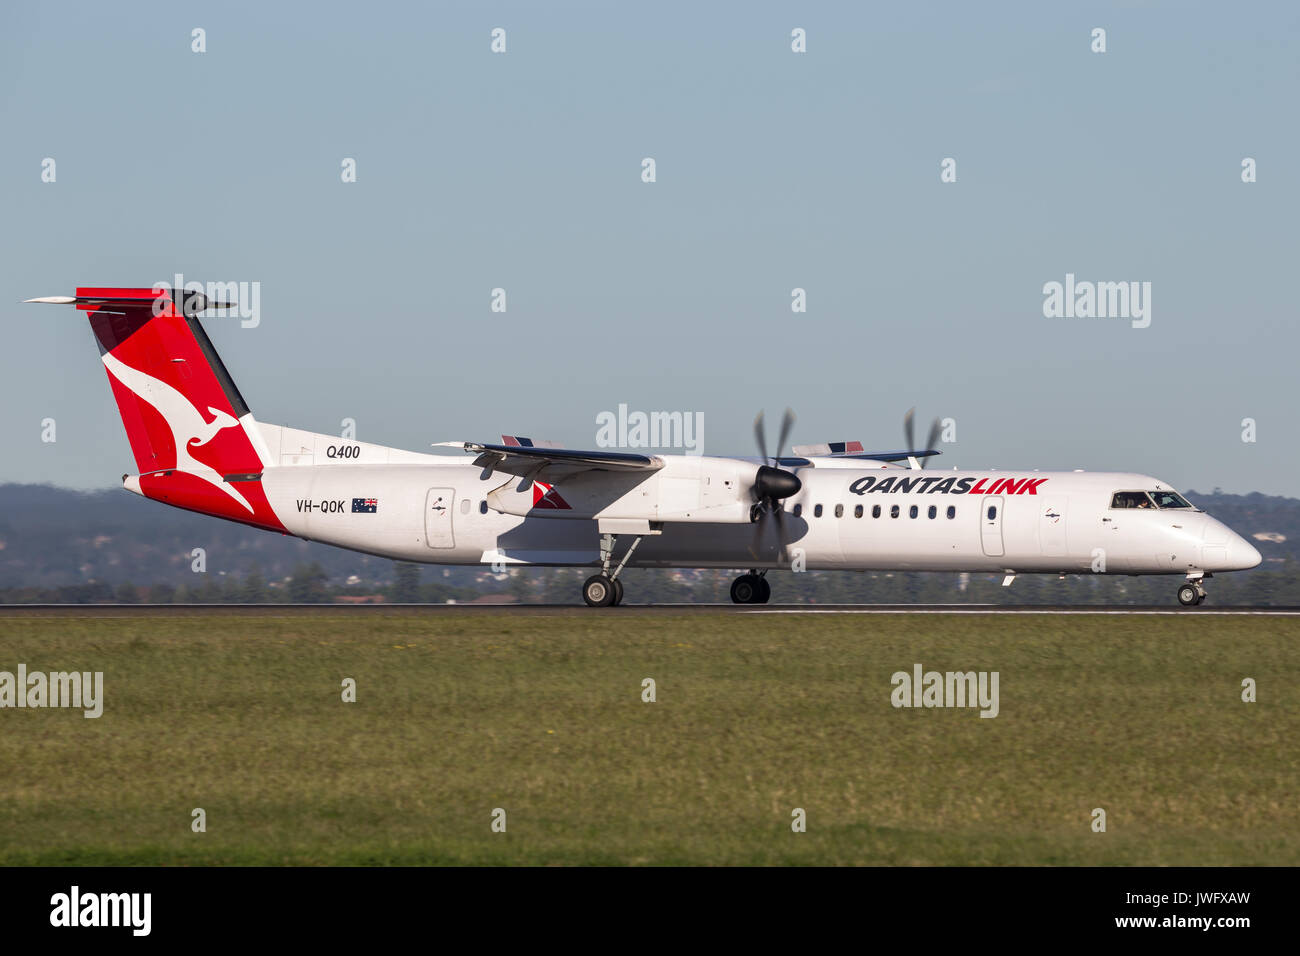 QantasLink (Qantas) deHavilland DHC-8 (Dash 8) twin engined regional airliner aircraft at Sydney Airport. Stock Photo